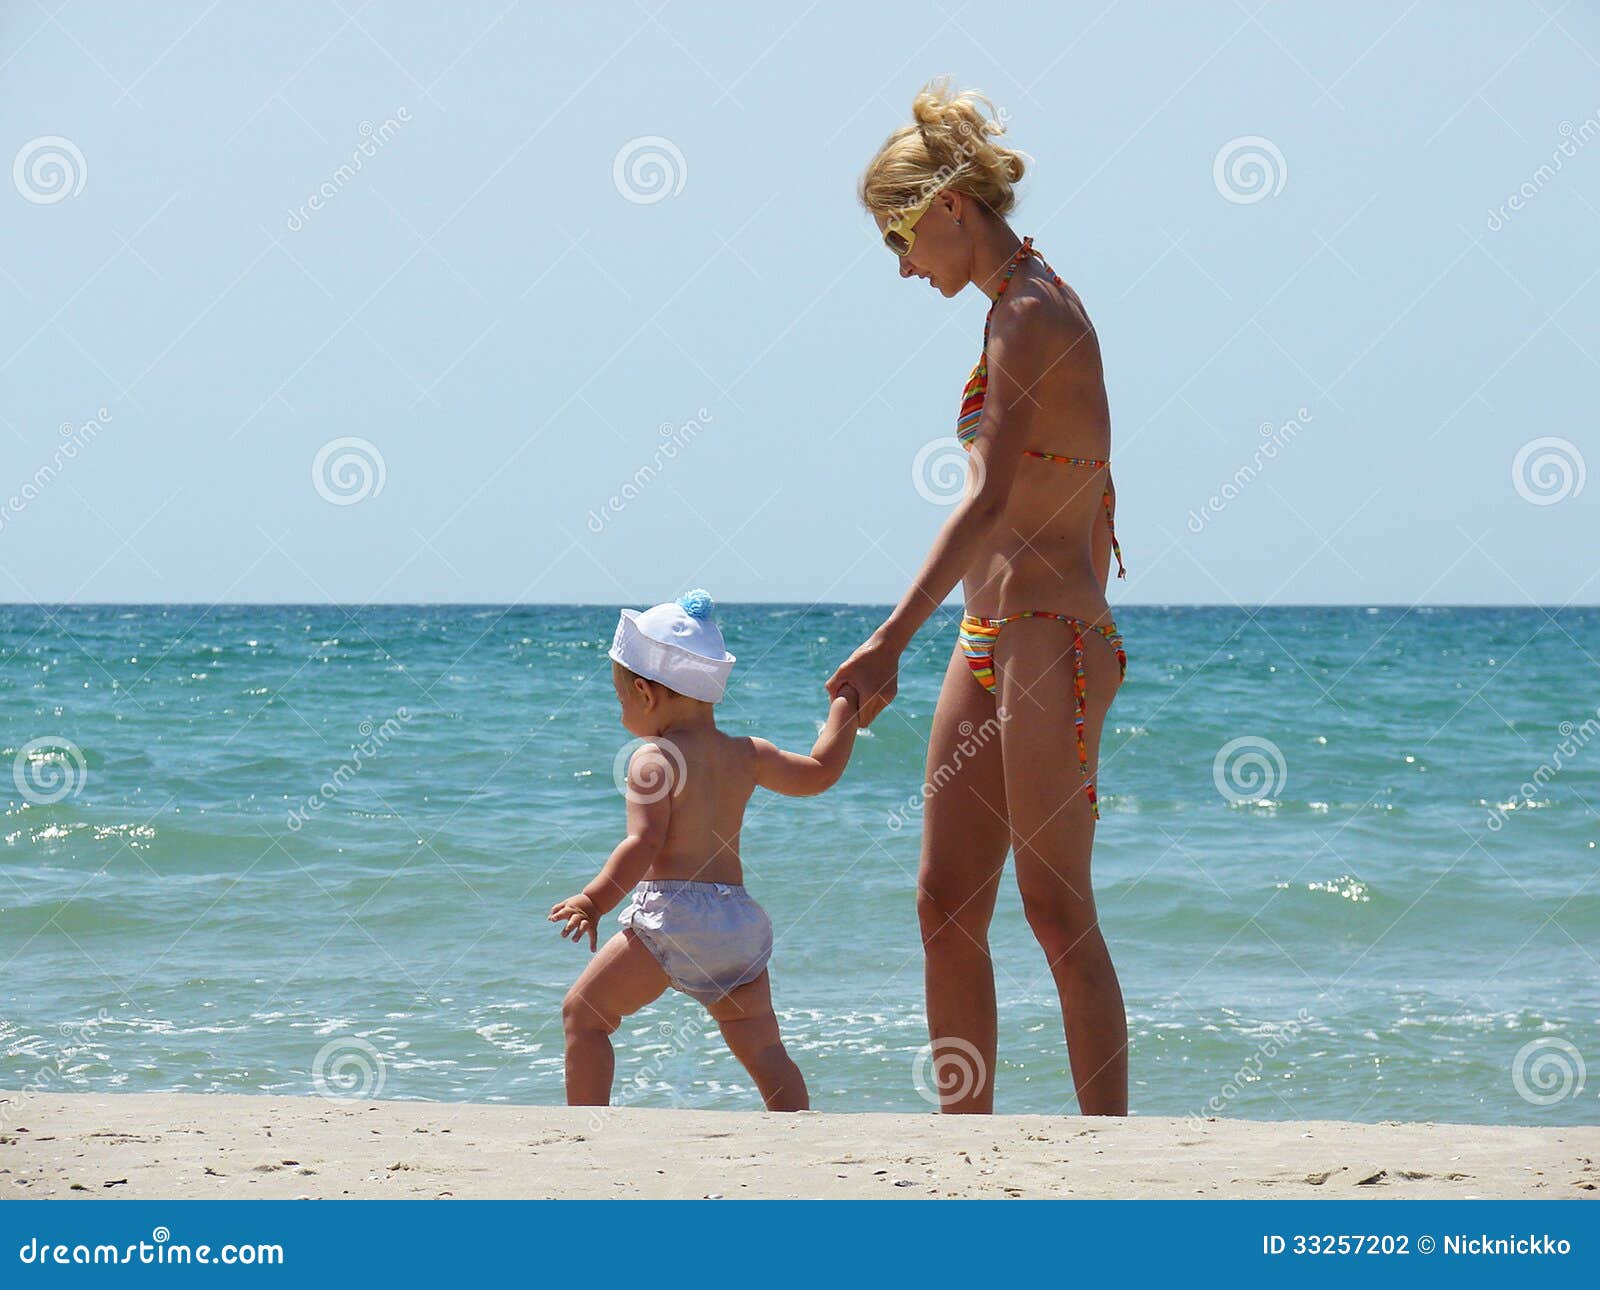 сын на пляже голым фото 60